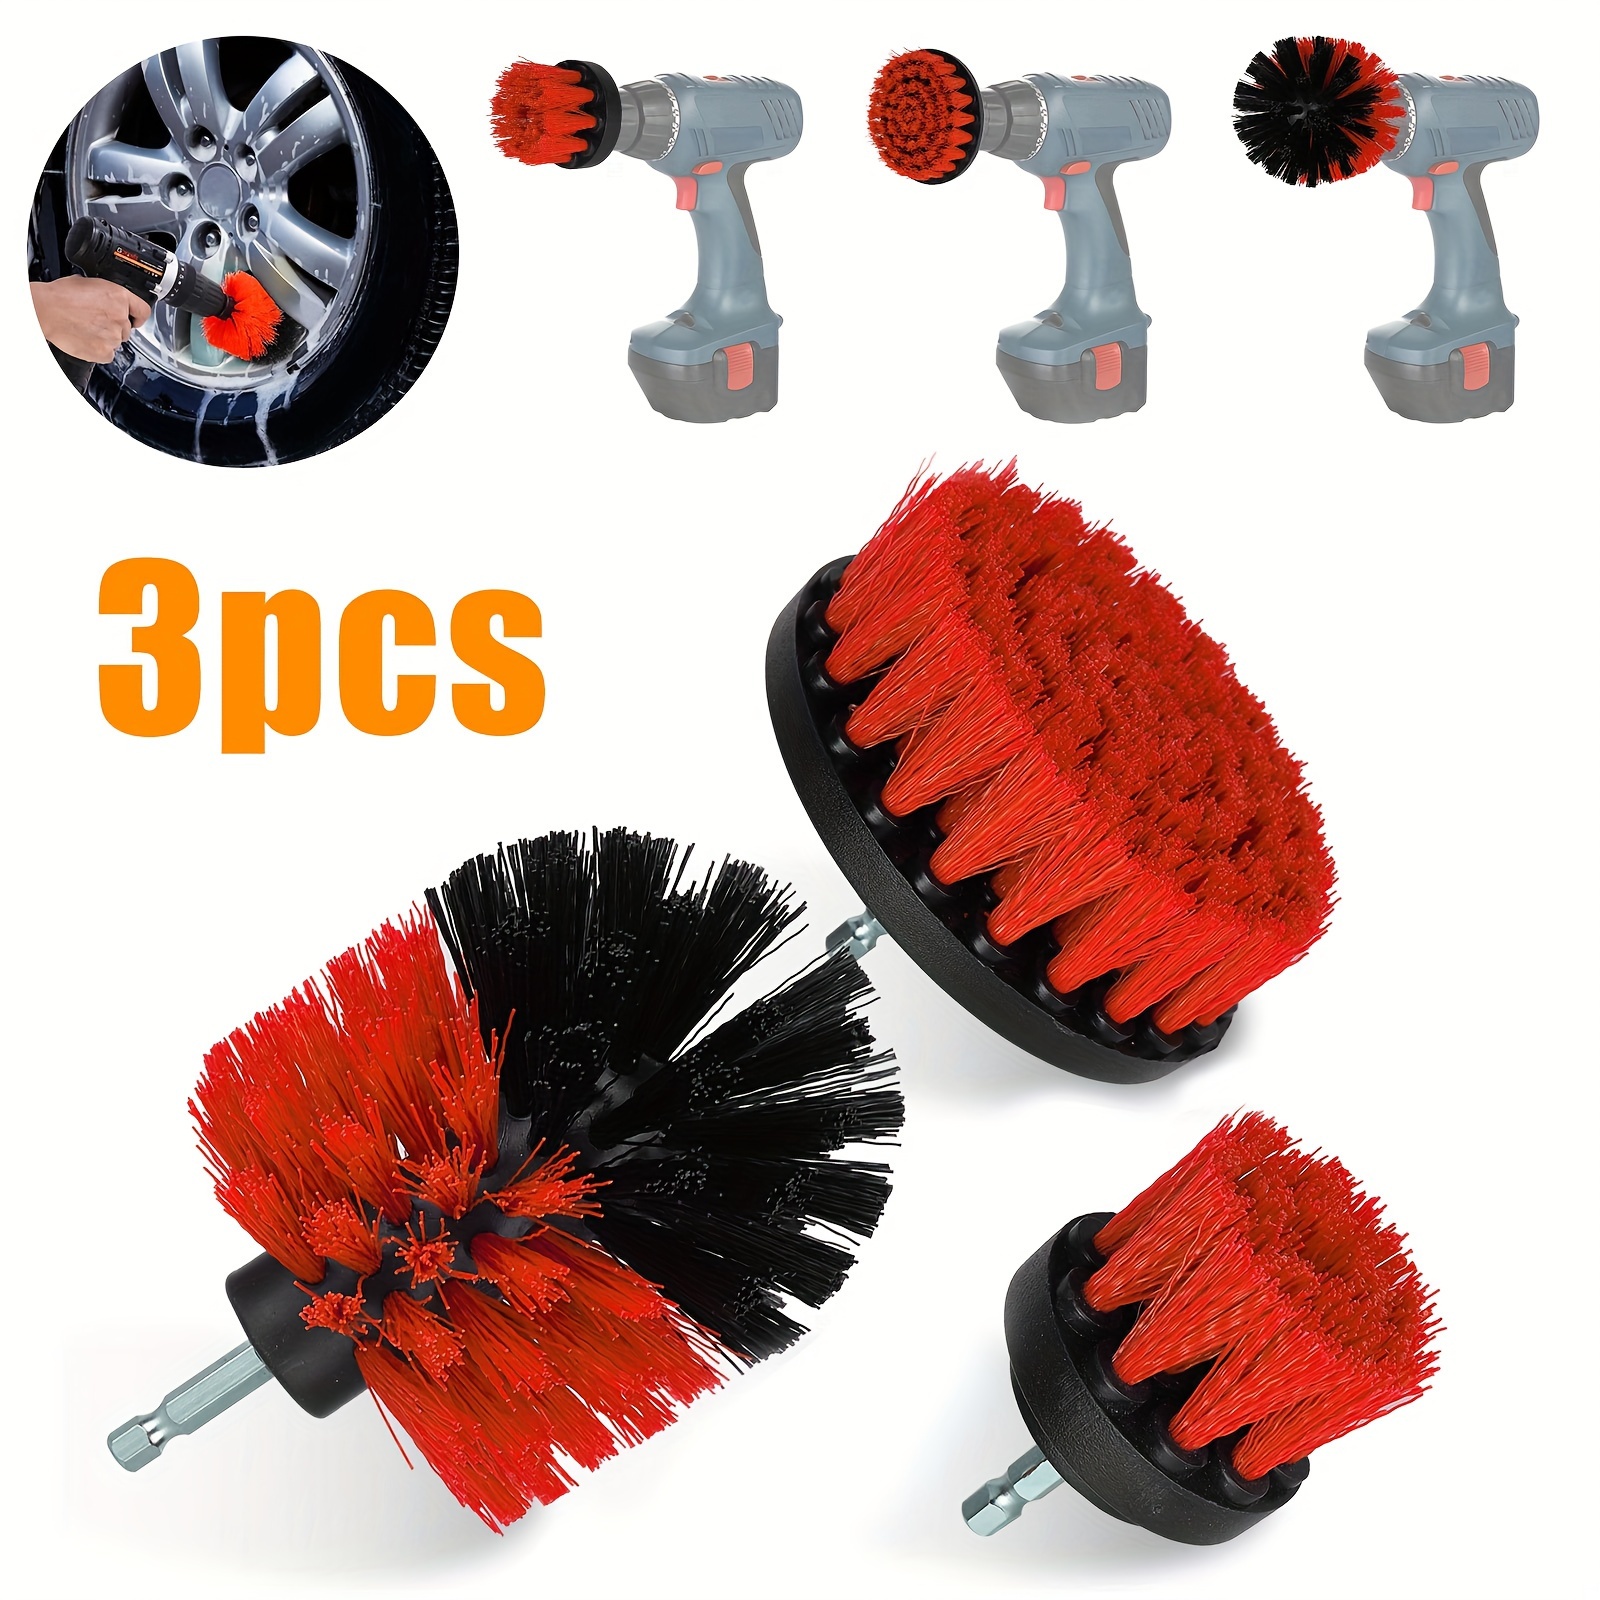 

3pcs/set Car Drill Brush, Car Wheel Tire Rim Scrub, Red Drill Washing Cleaning Tool Brush, For Auto Detailing